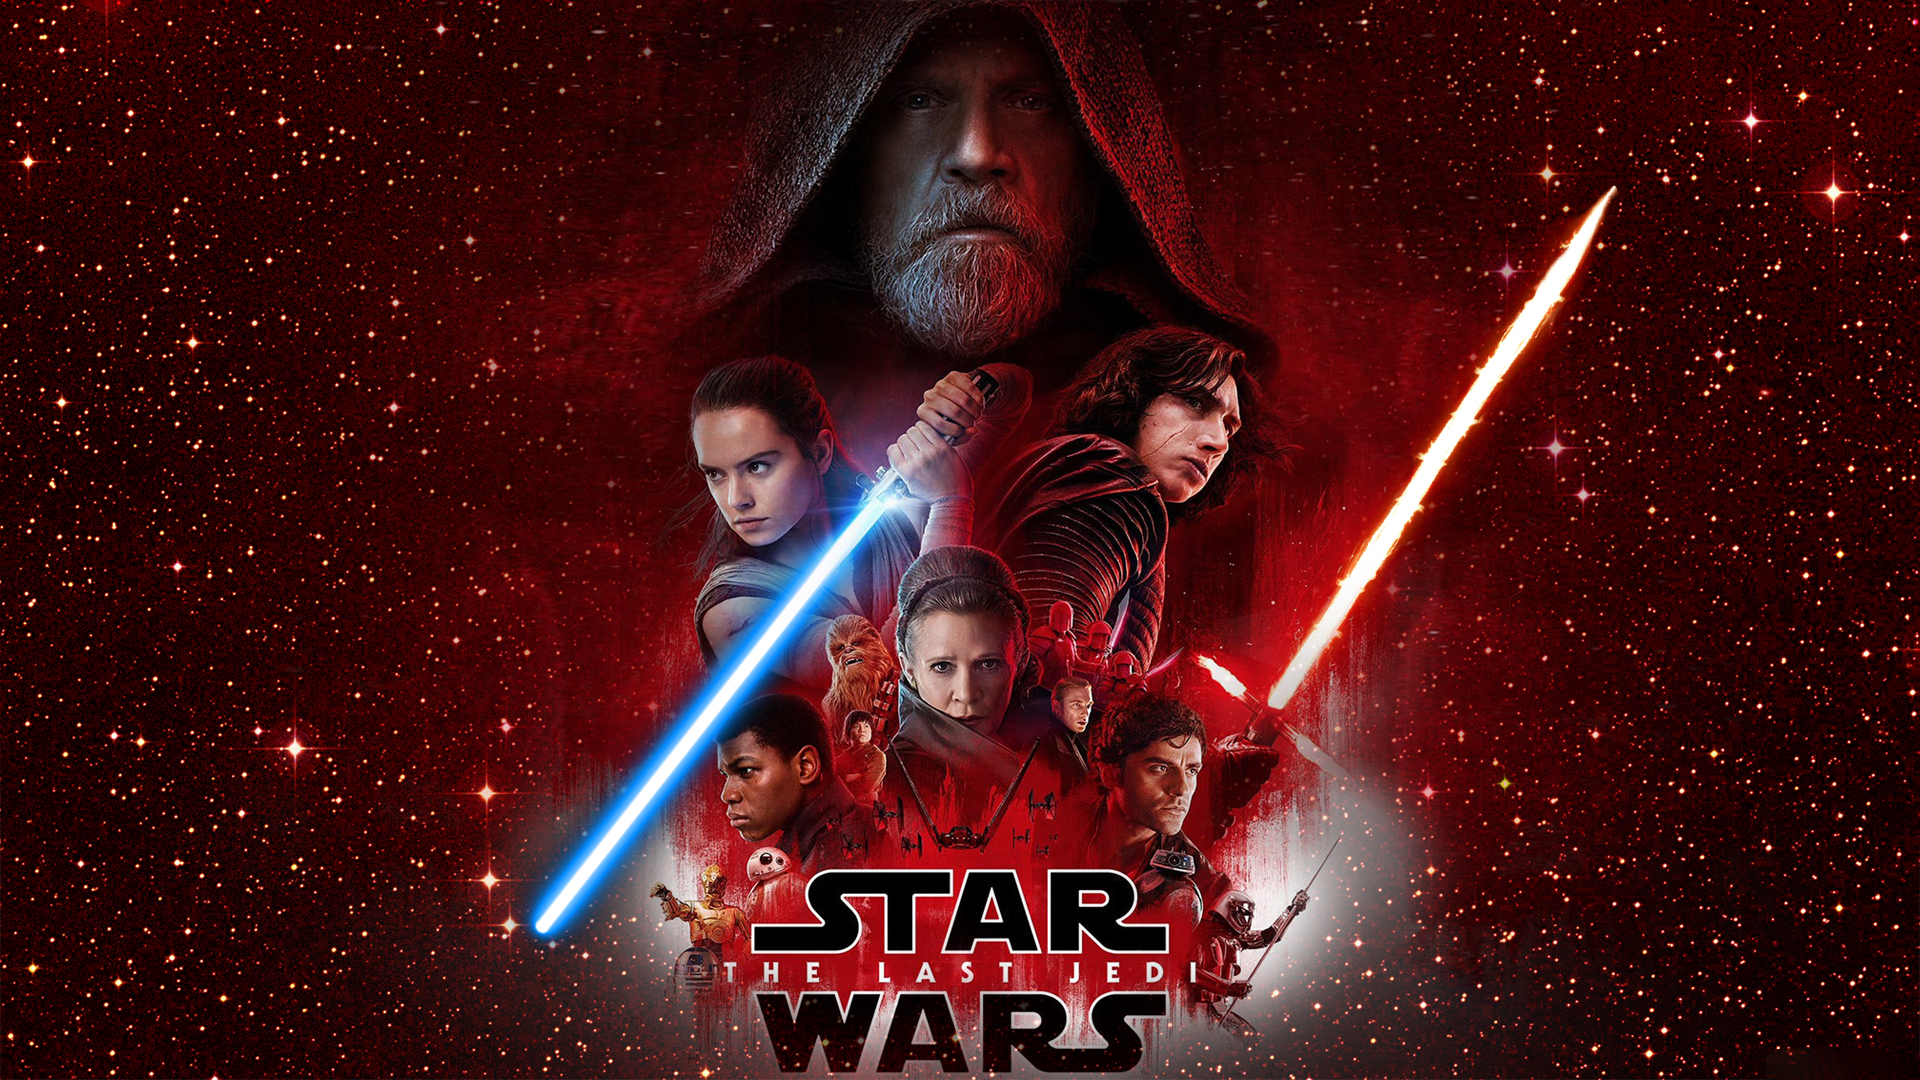 Star Wars The Last Jedi Rey From Star Wars Kylo Ren Princess Leia Luke Skywalker Lightsaber Movies J 1920x1080